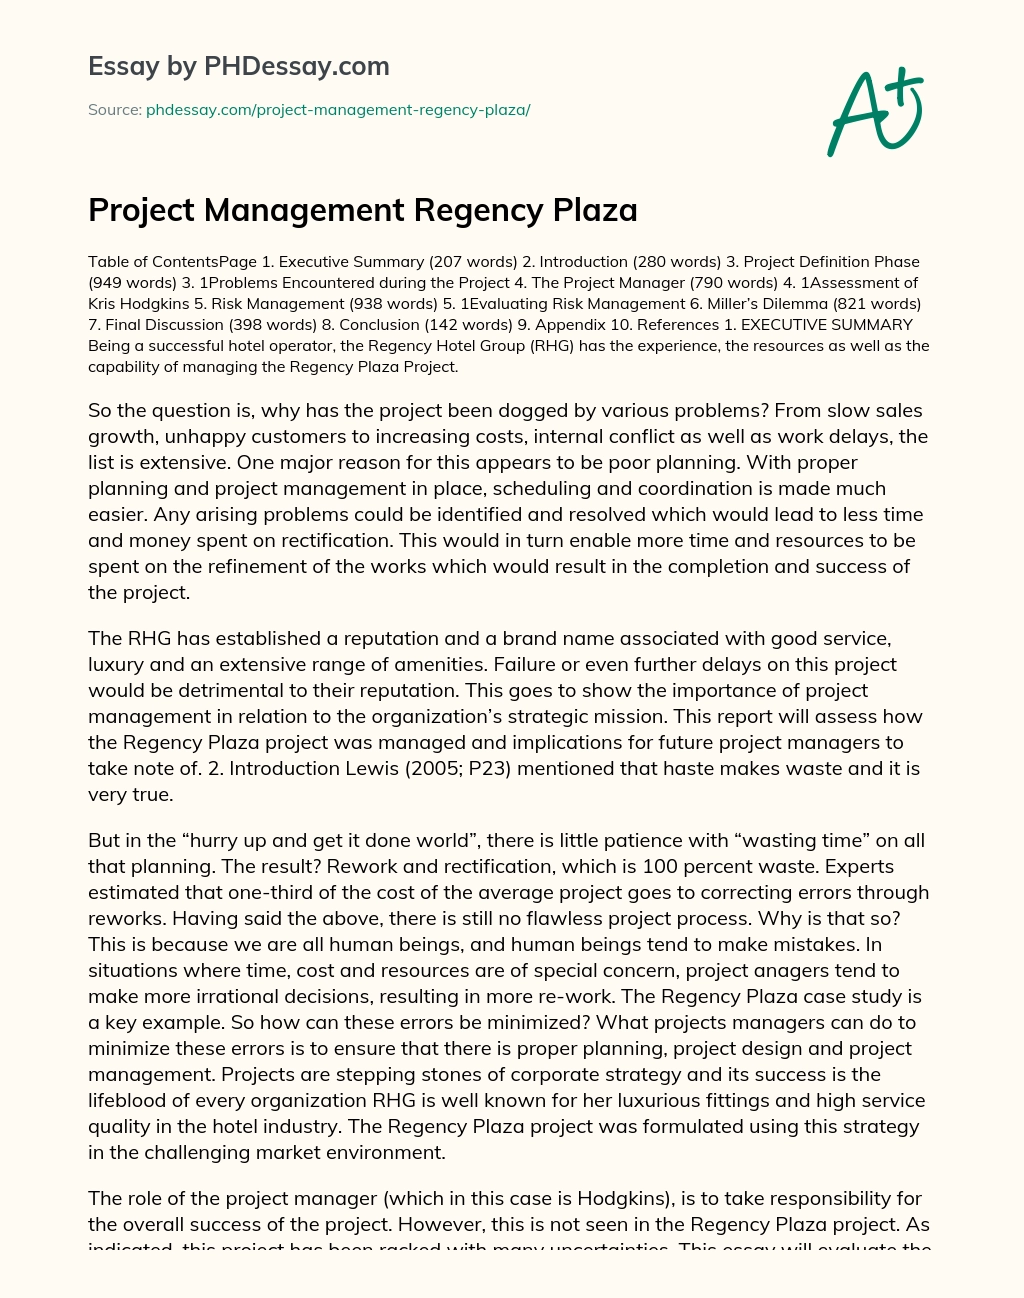 Project Management Regency Plaza essay